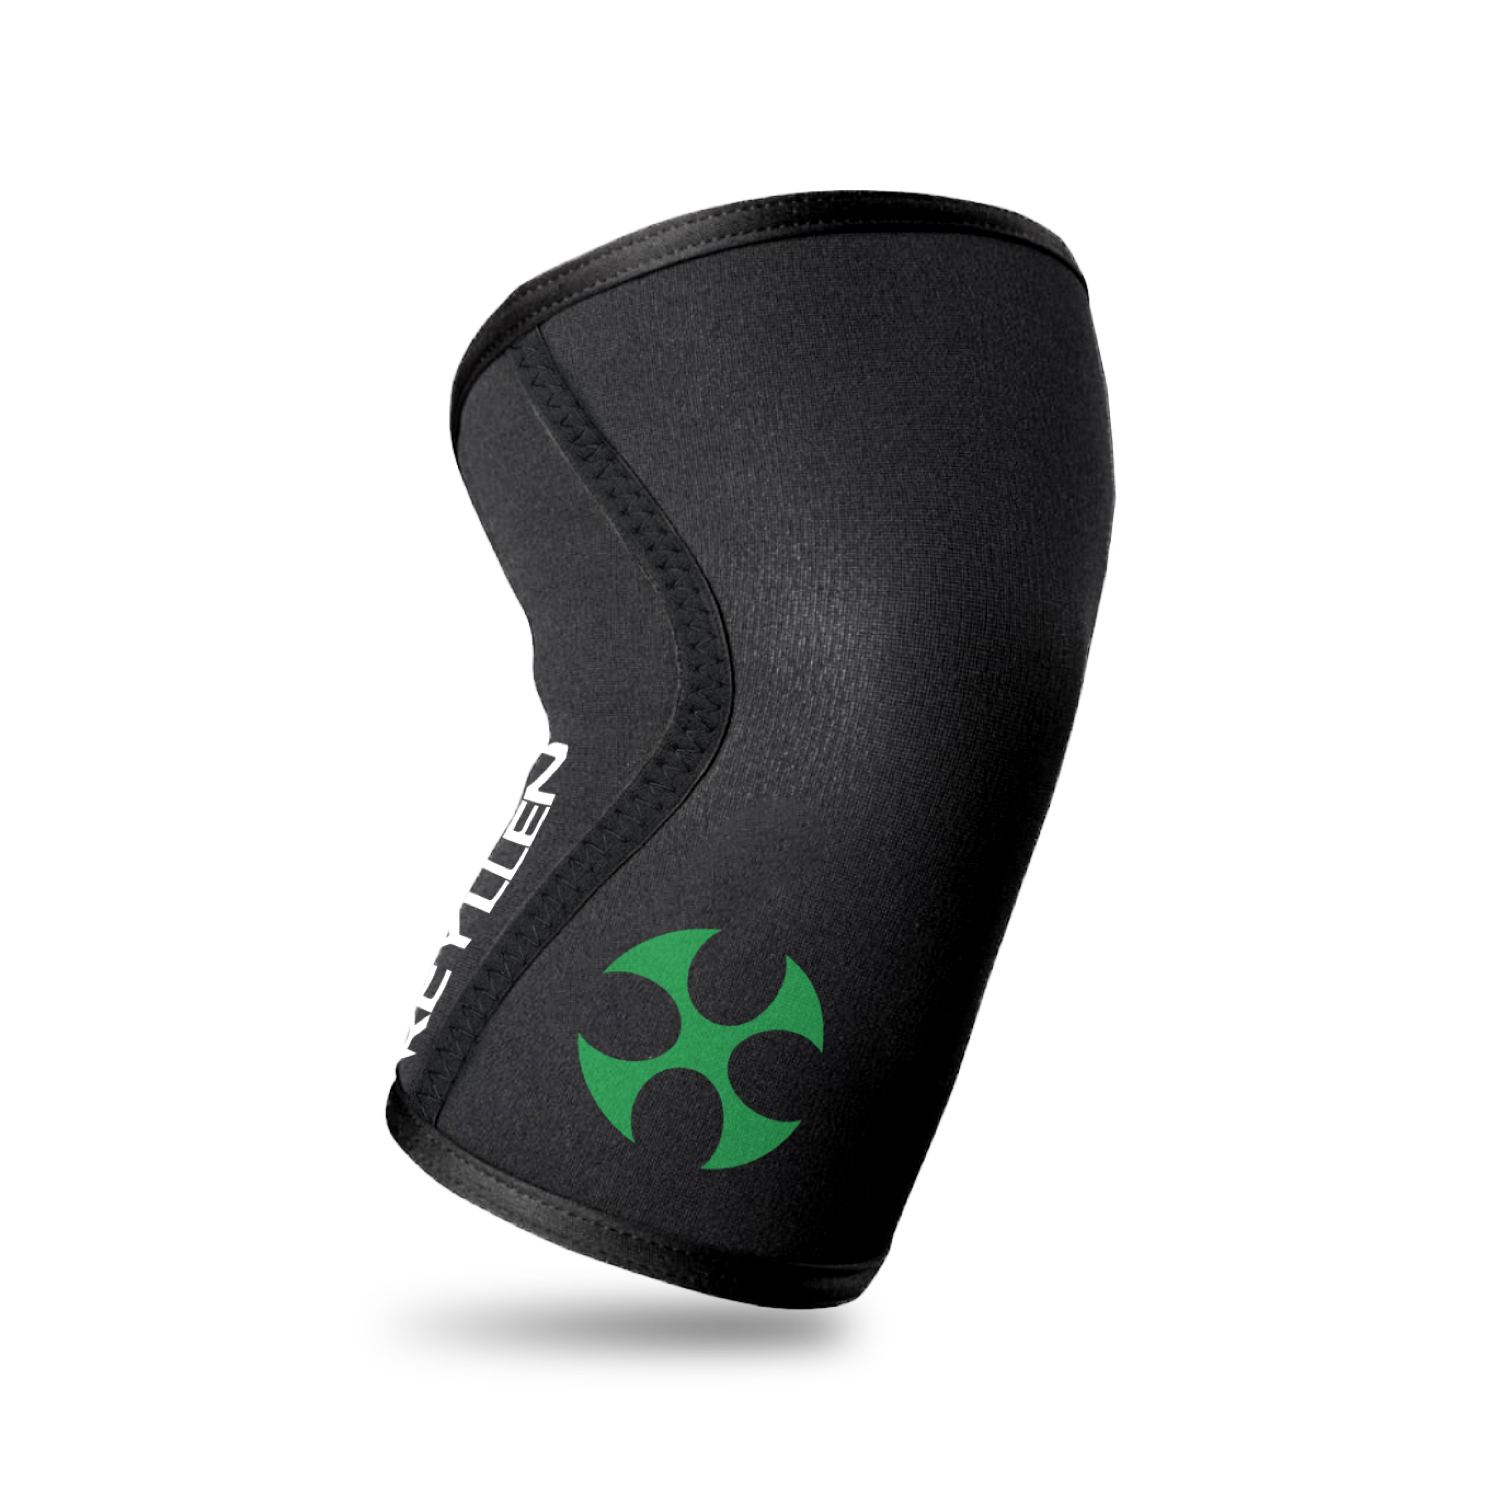 Venta X3 Knee Sleeves Neoprene Brace Compression Support 7mm - Black - Feature PNG image Reyllen